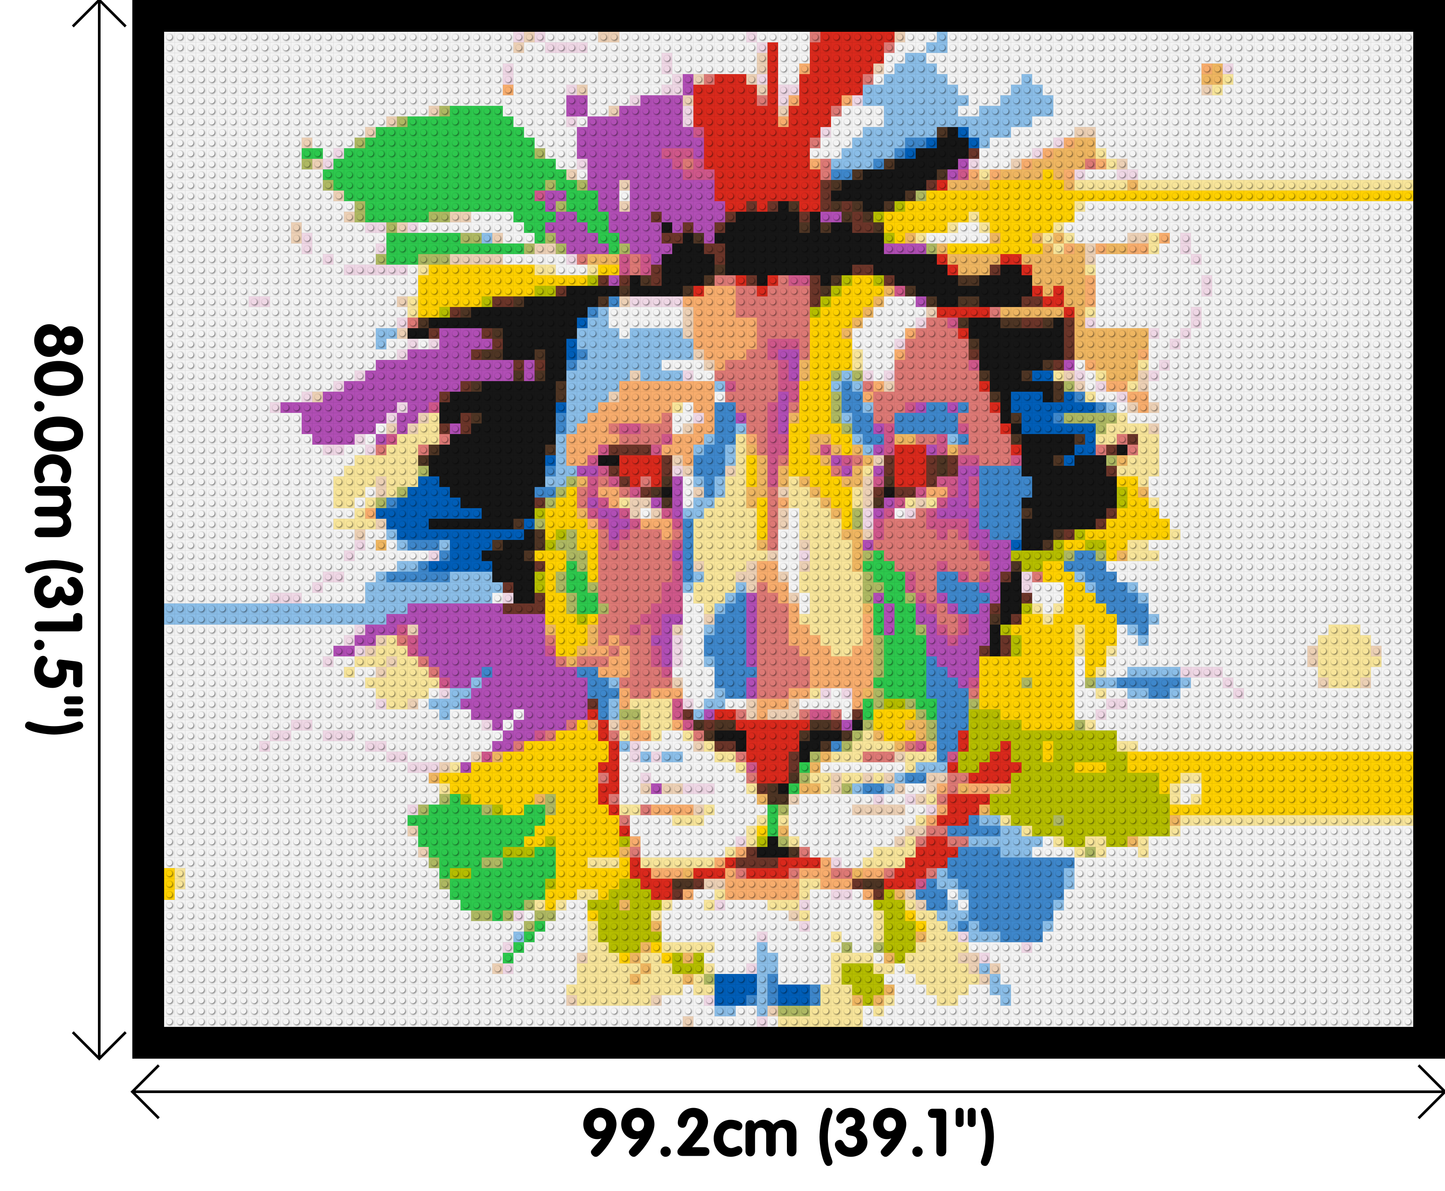 Abstract Lion Colourful Pop Art - Brick Art Mosaic Kit